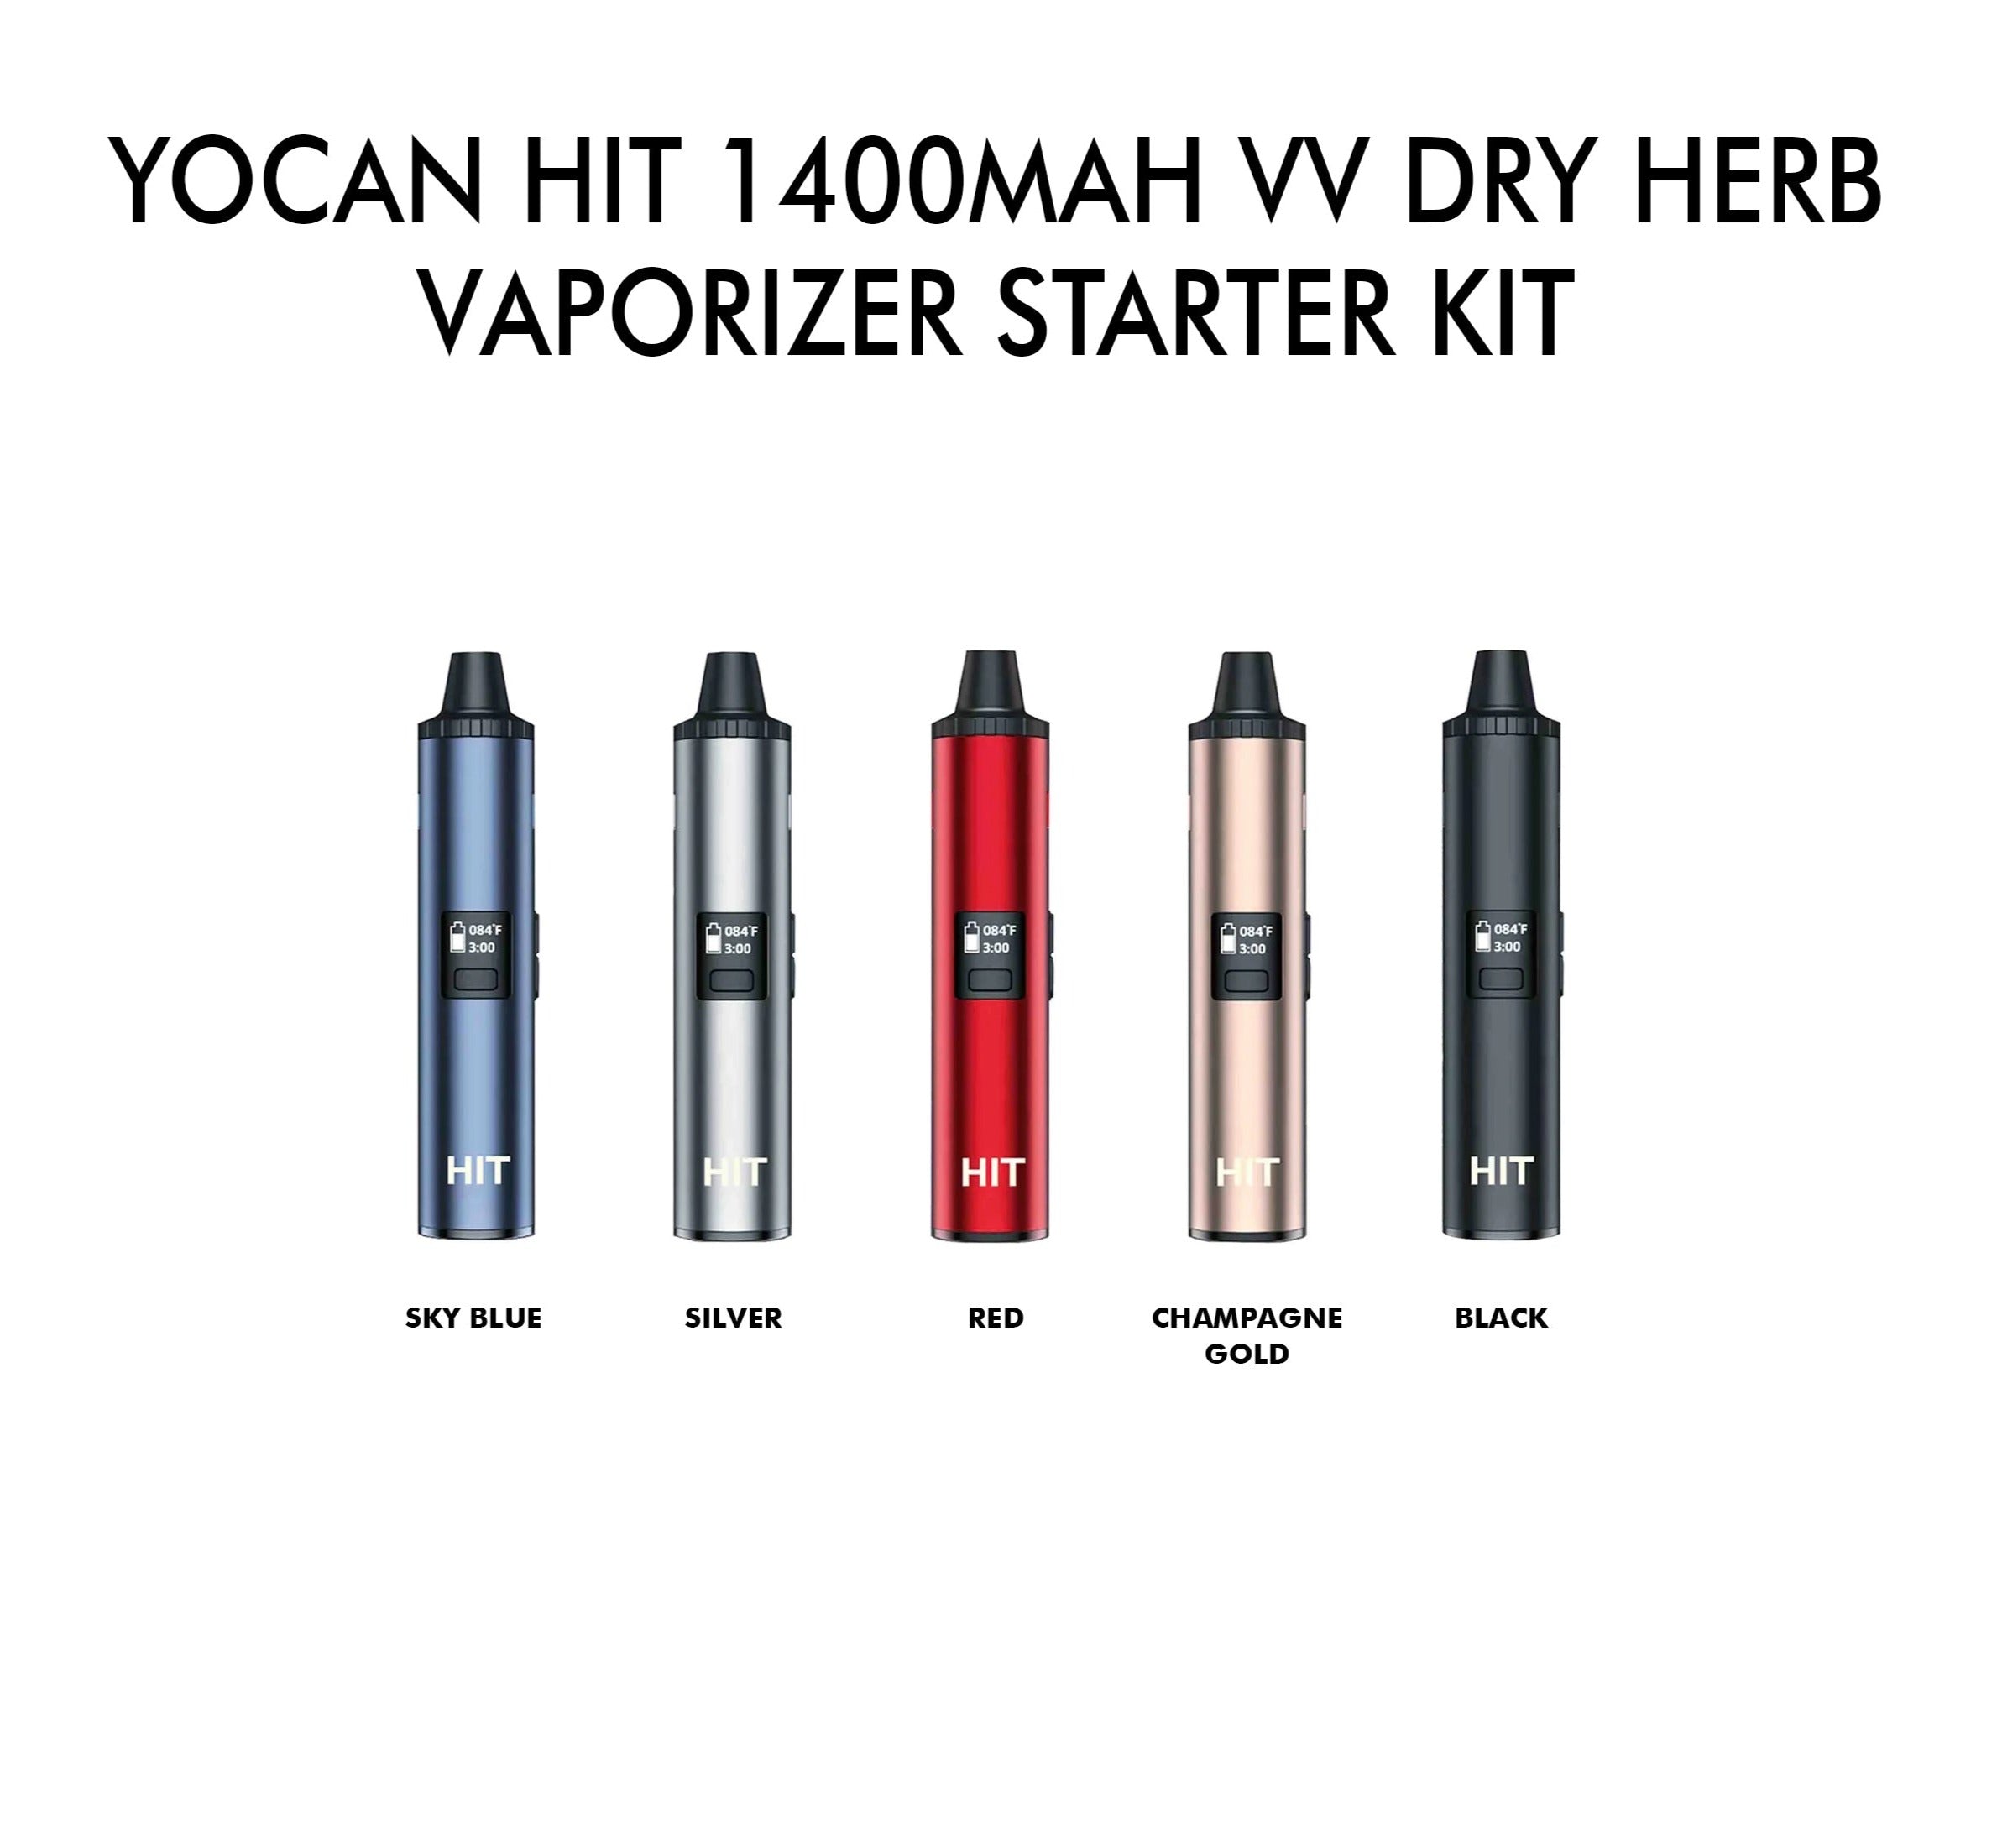 Yocan HIT 1400mAh VV Dry Herb Vaporizer Starter Kit